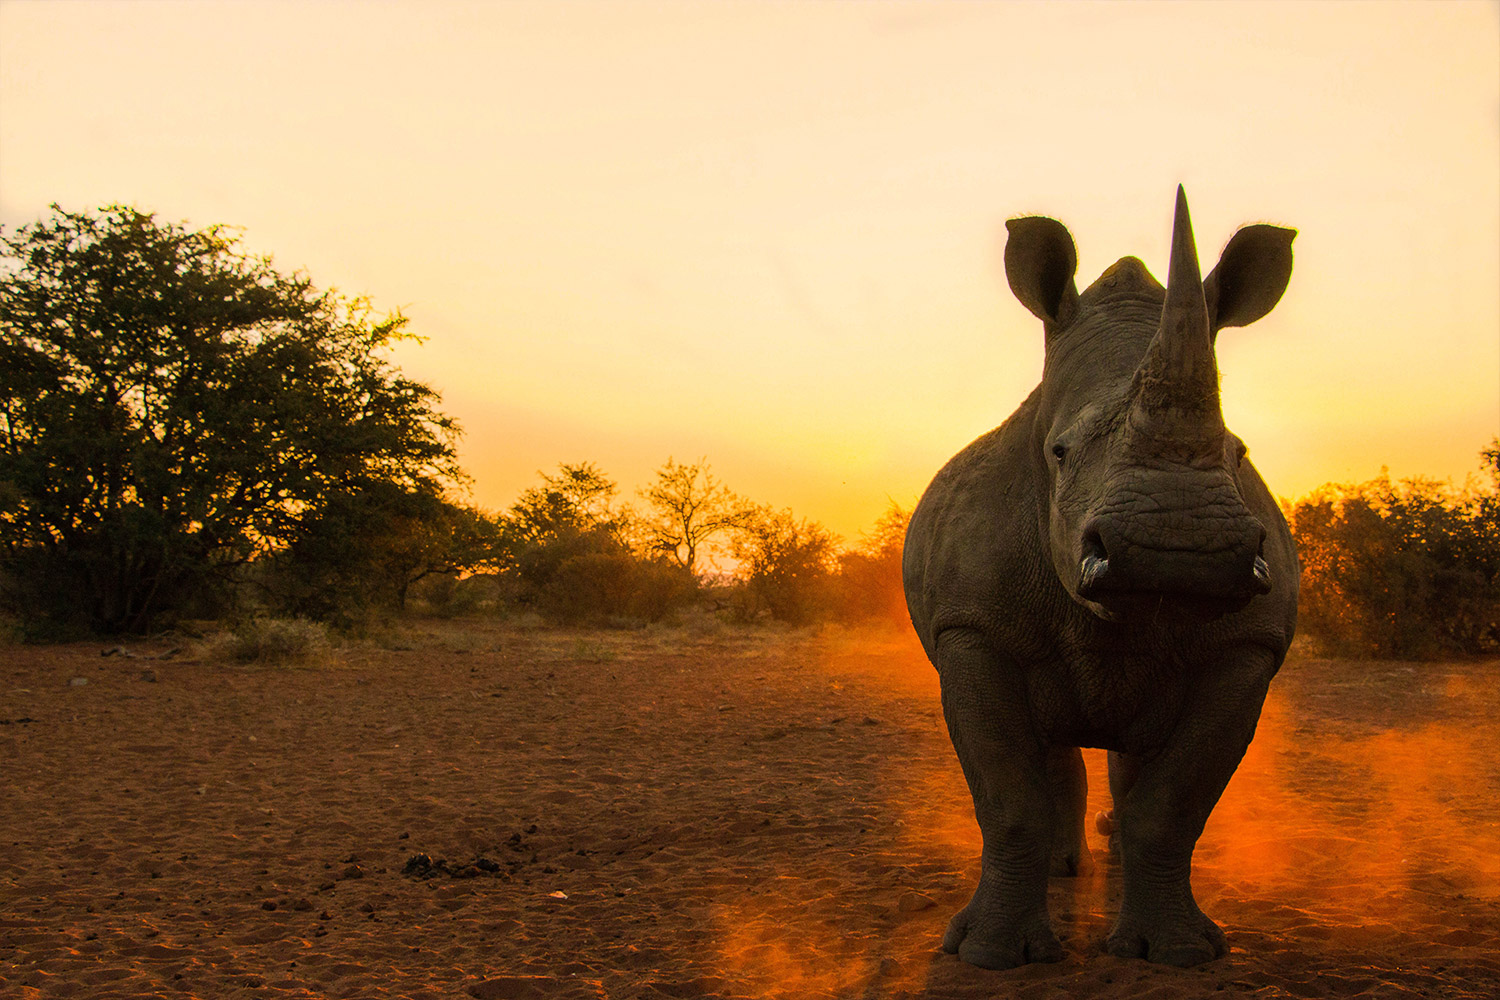 Wild Rhino Heart - Jason Savage - Wildlife Photography Feature - Conjour VI